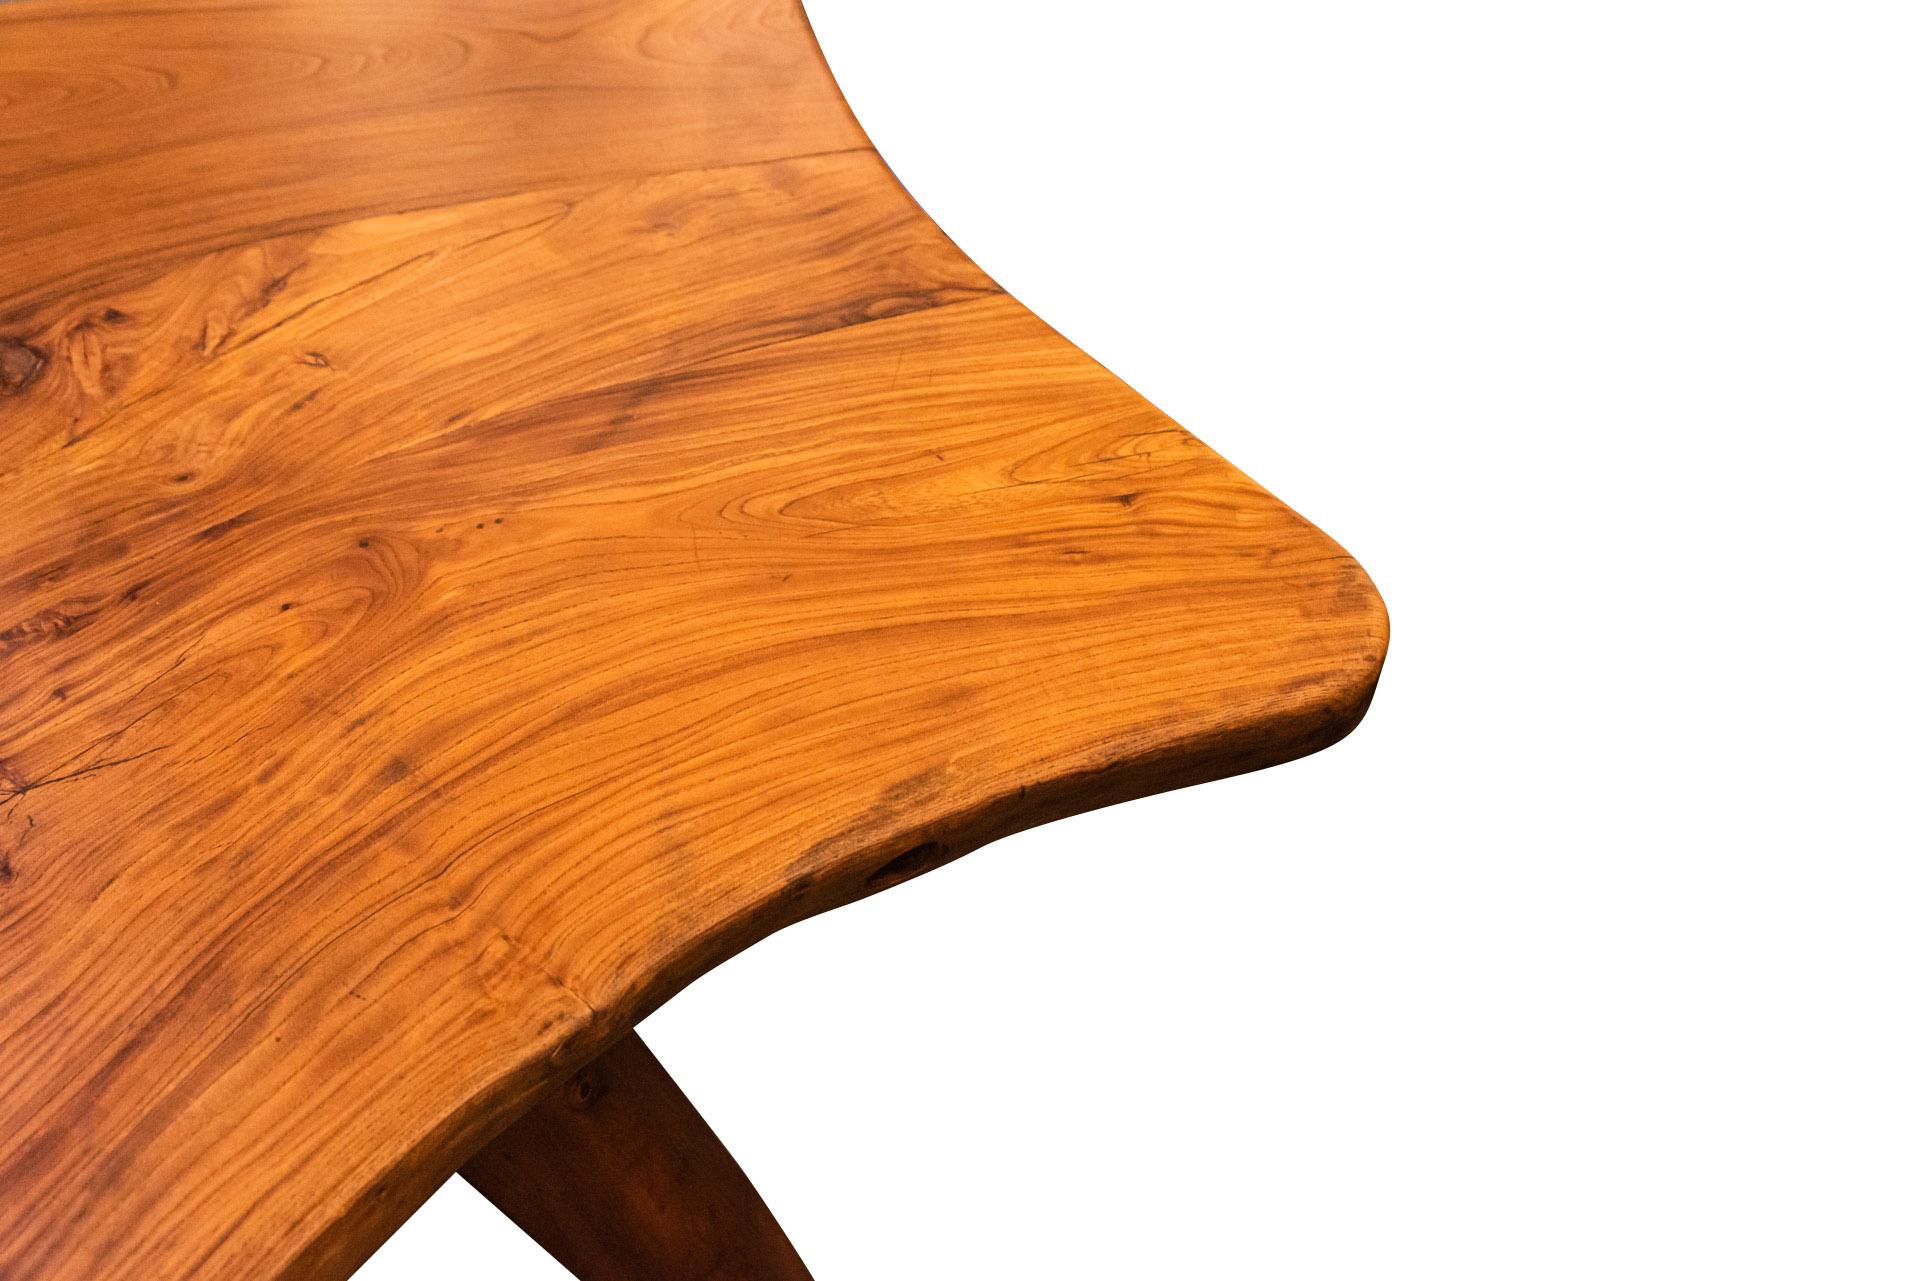 Freeform walnut dining table,
Rectangular top, four legs,
Beautiful patina, 
circa 1960, France. 

Measures : Height 69,5 cm, Width 176,5 cm, Depth 86 cm. 

